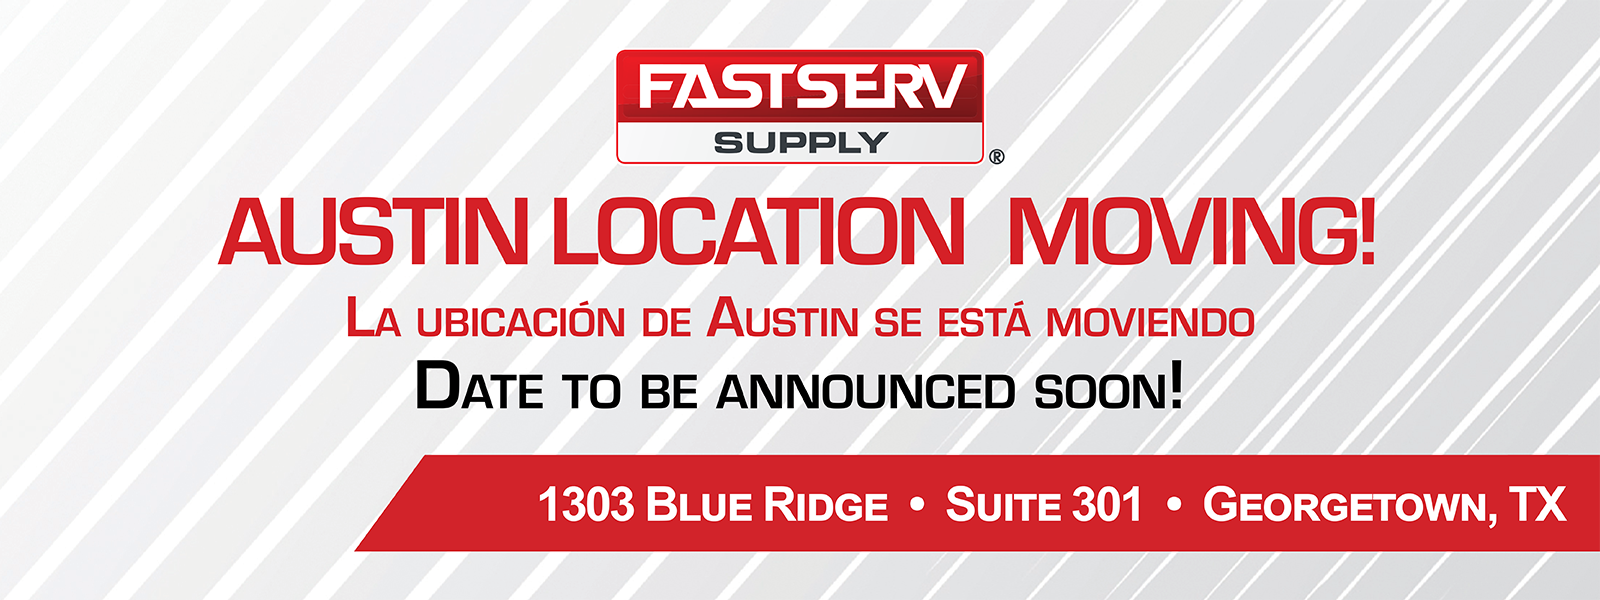 Austin Location Moving